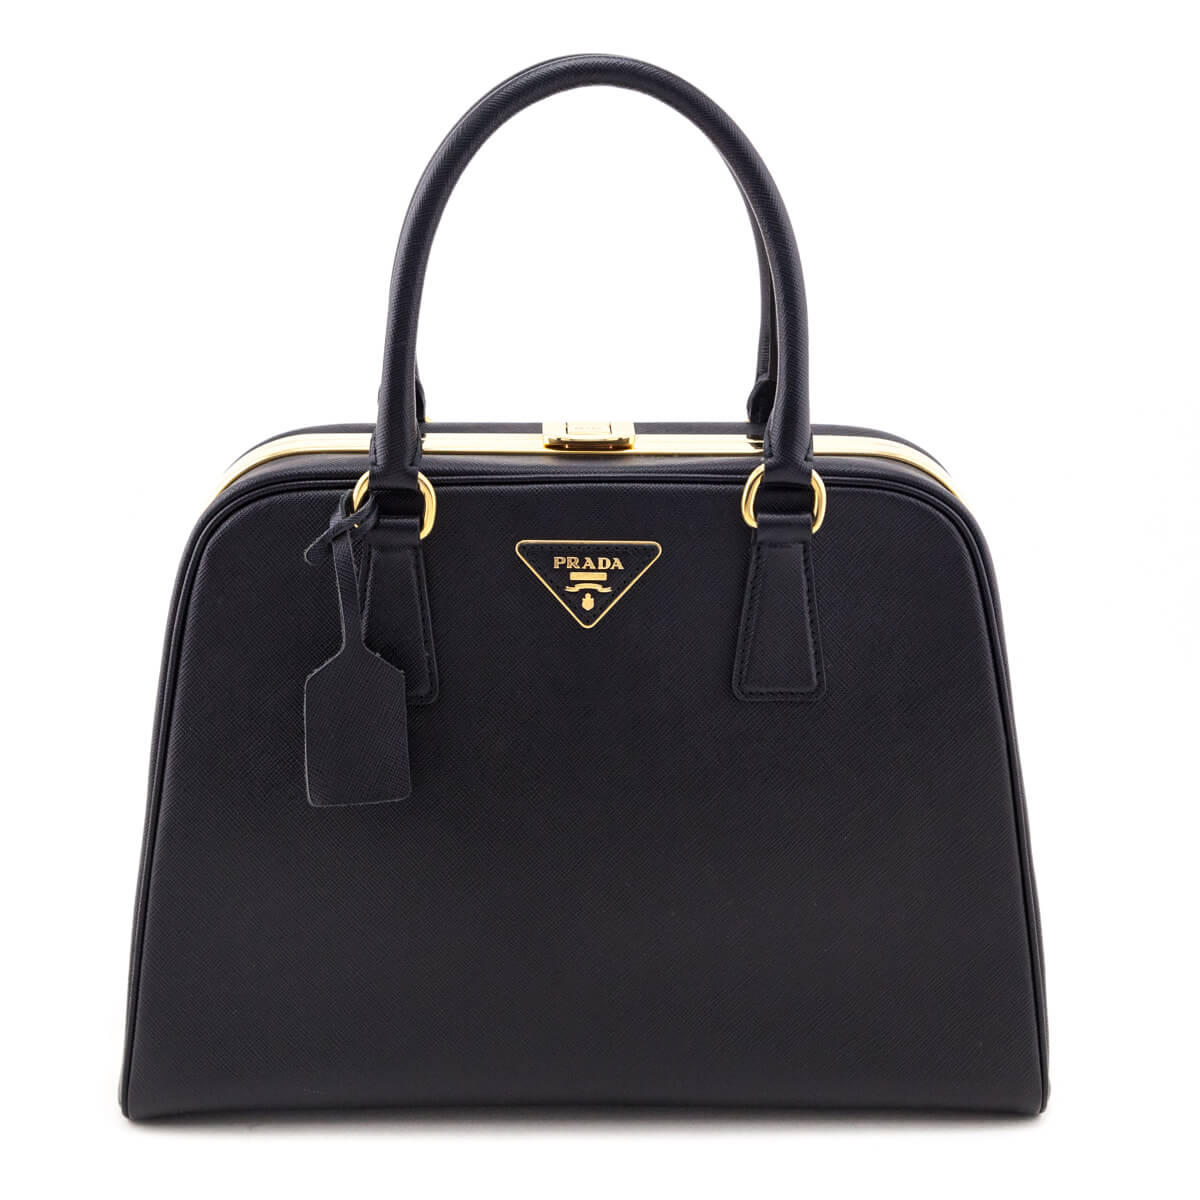 Louis Vuitton, Bags, Please Share Like Lv Gucci Chanel Prada Hermes Dior  Fendi Etc